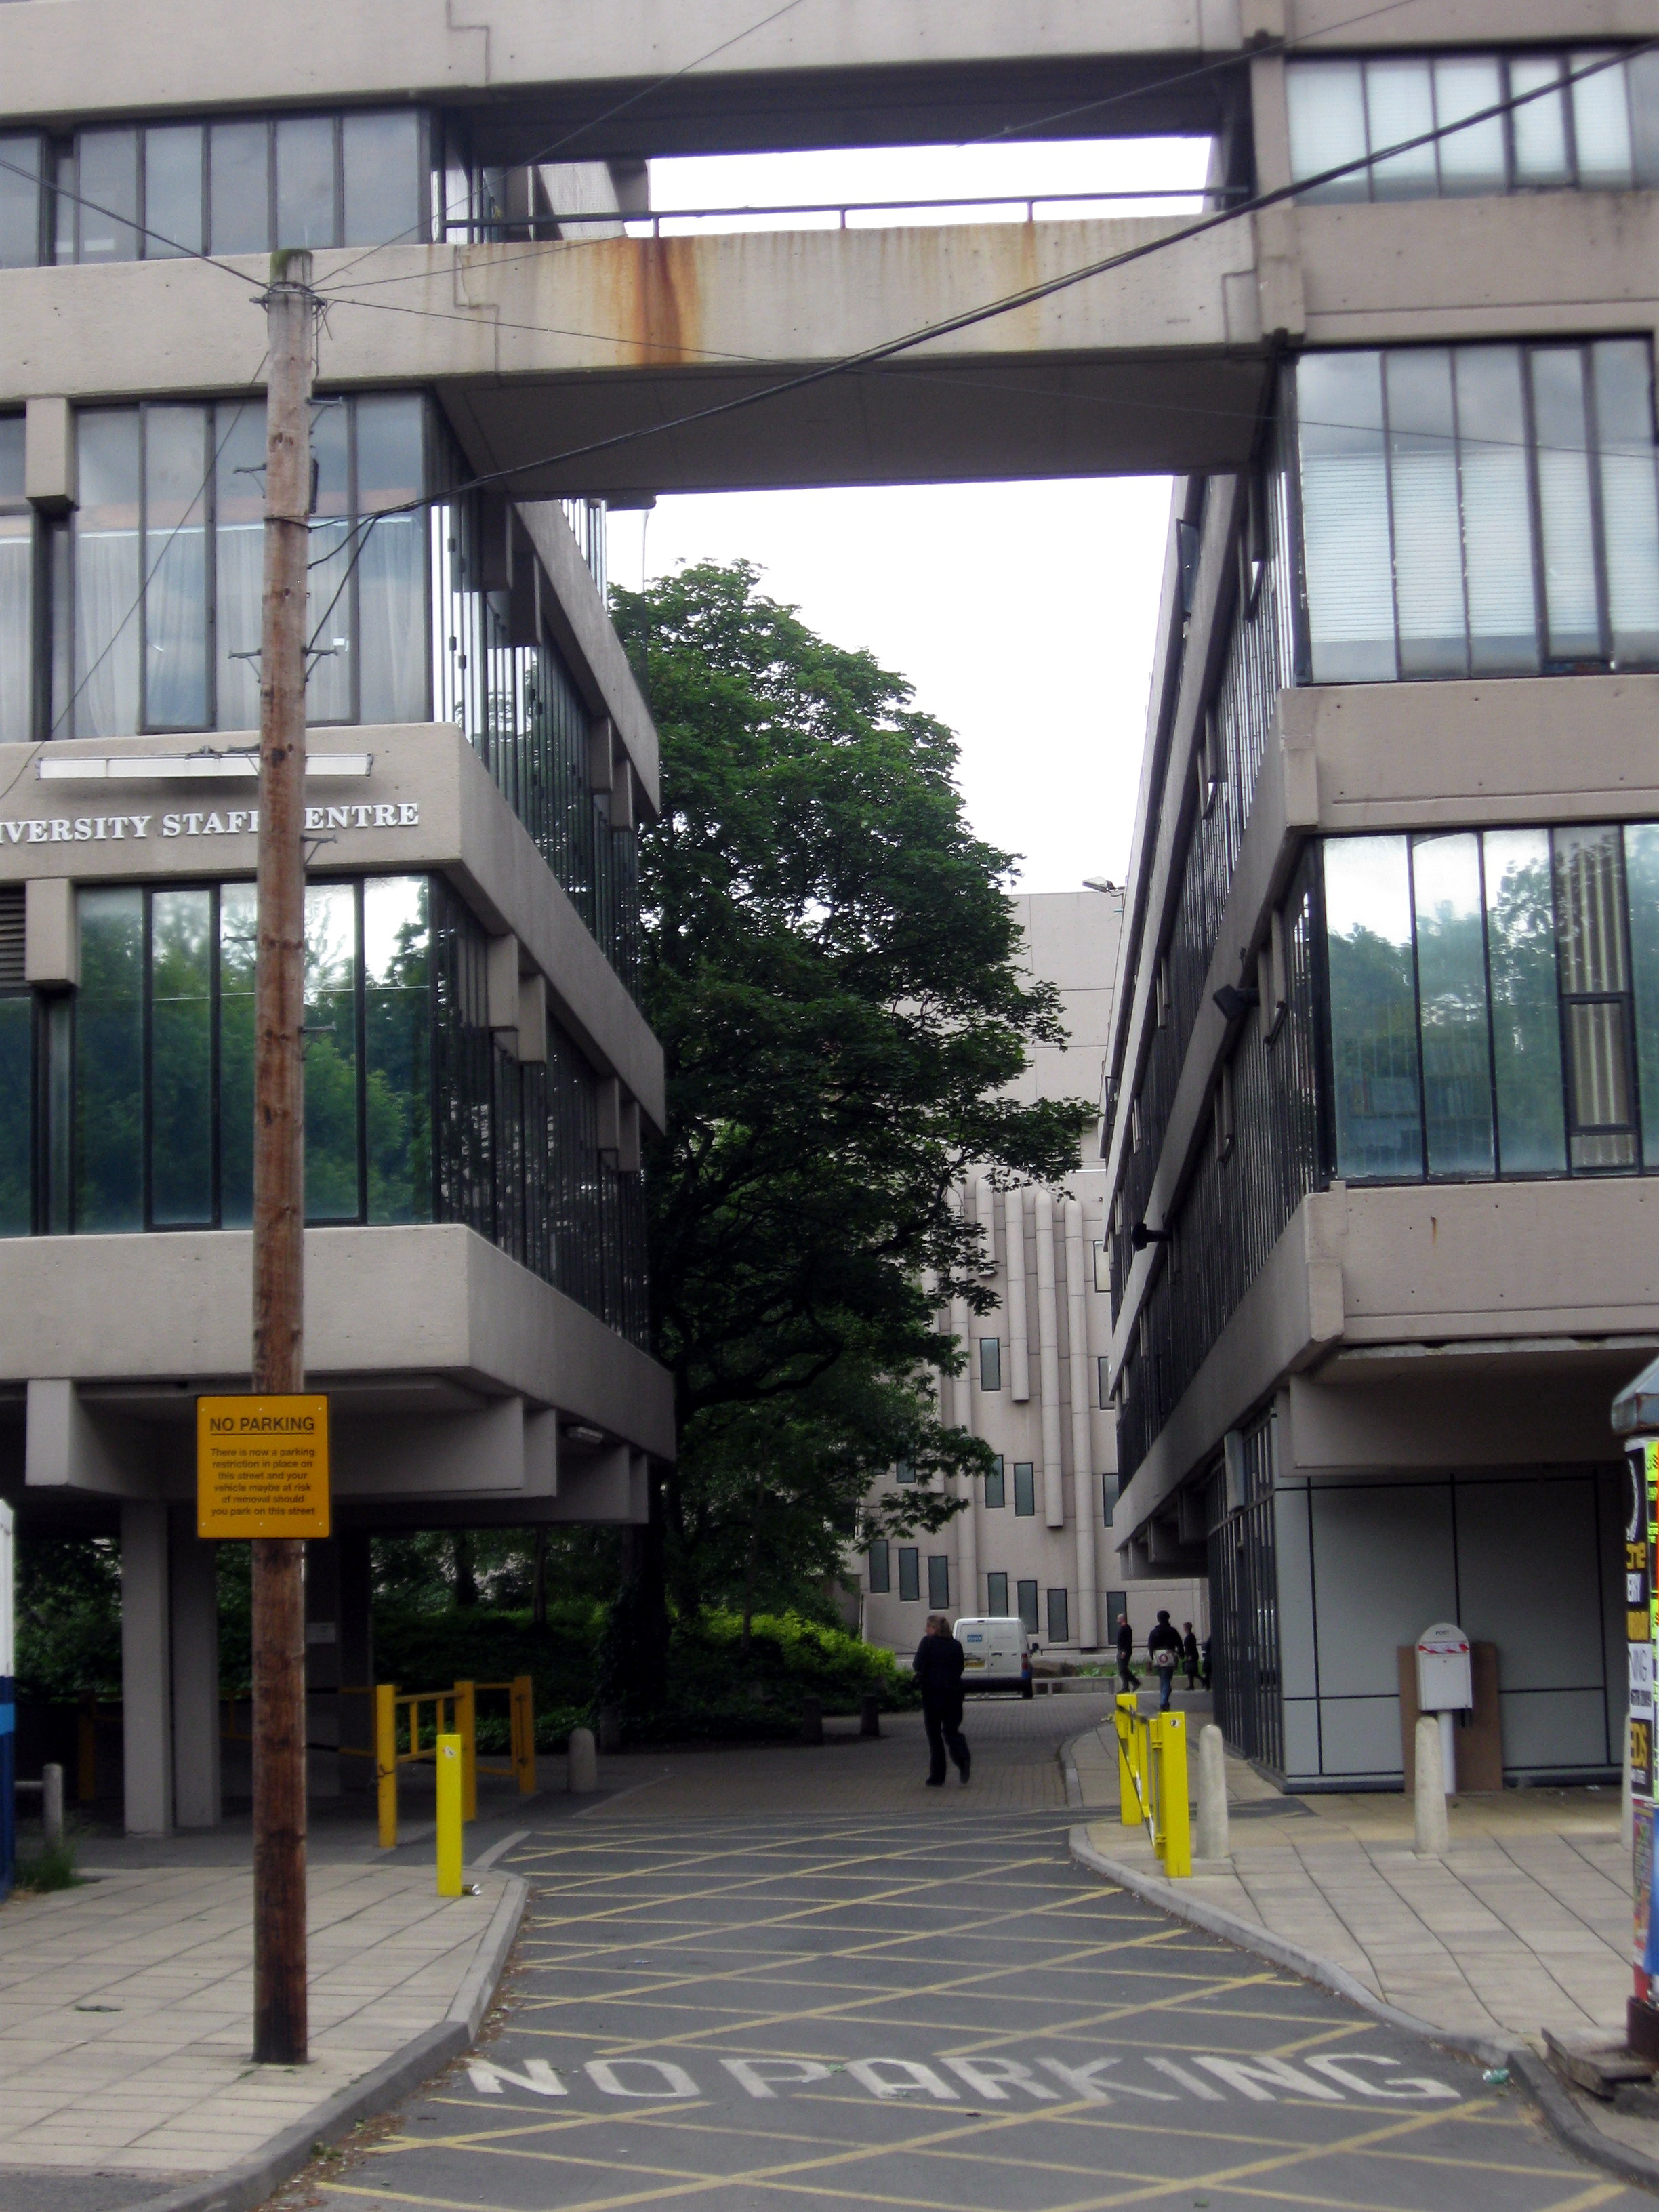 File:Entrance to Leeds University campus from Mount Preston Street (2009) - panoramio.jpg - Wikimedia Commons